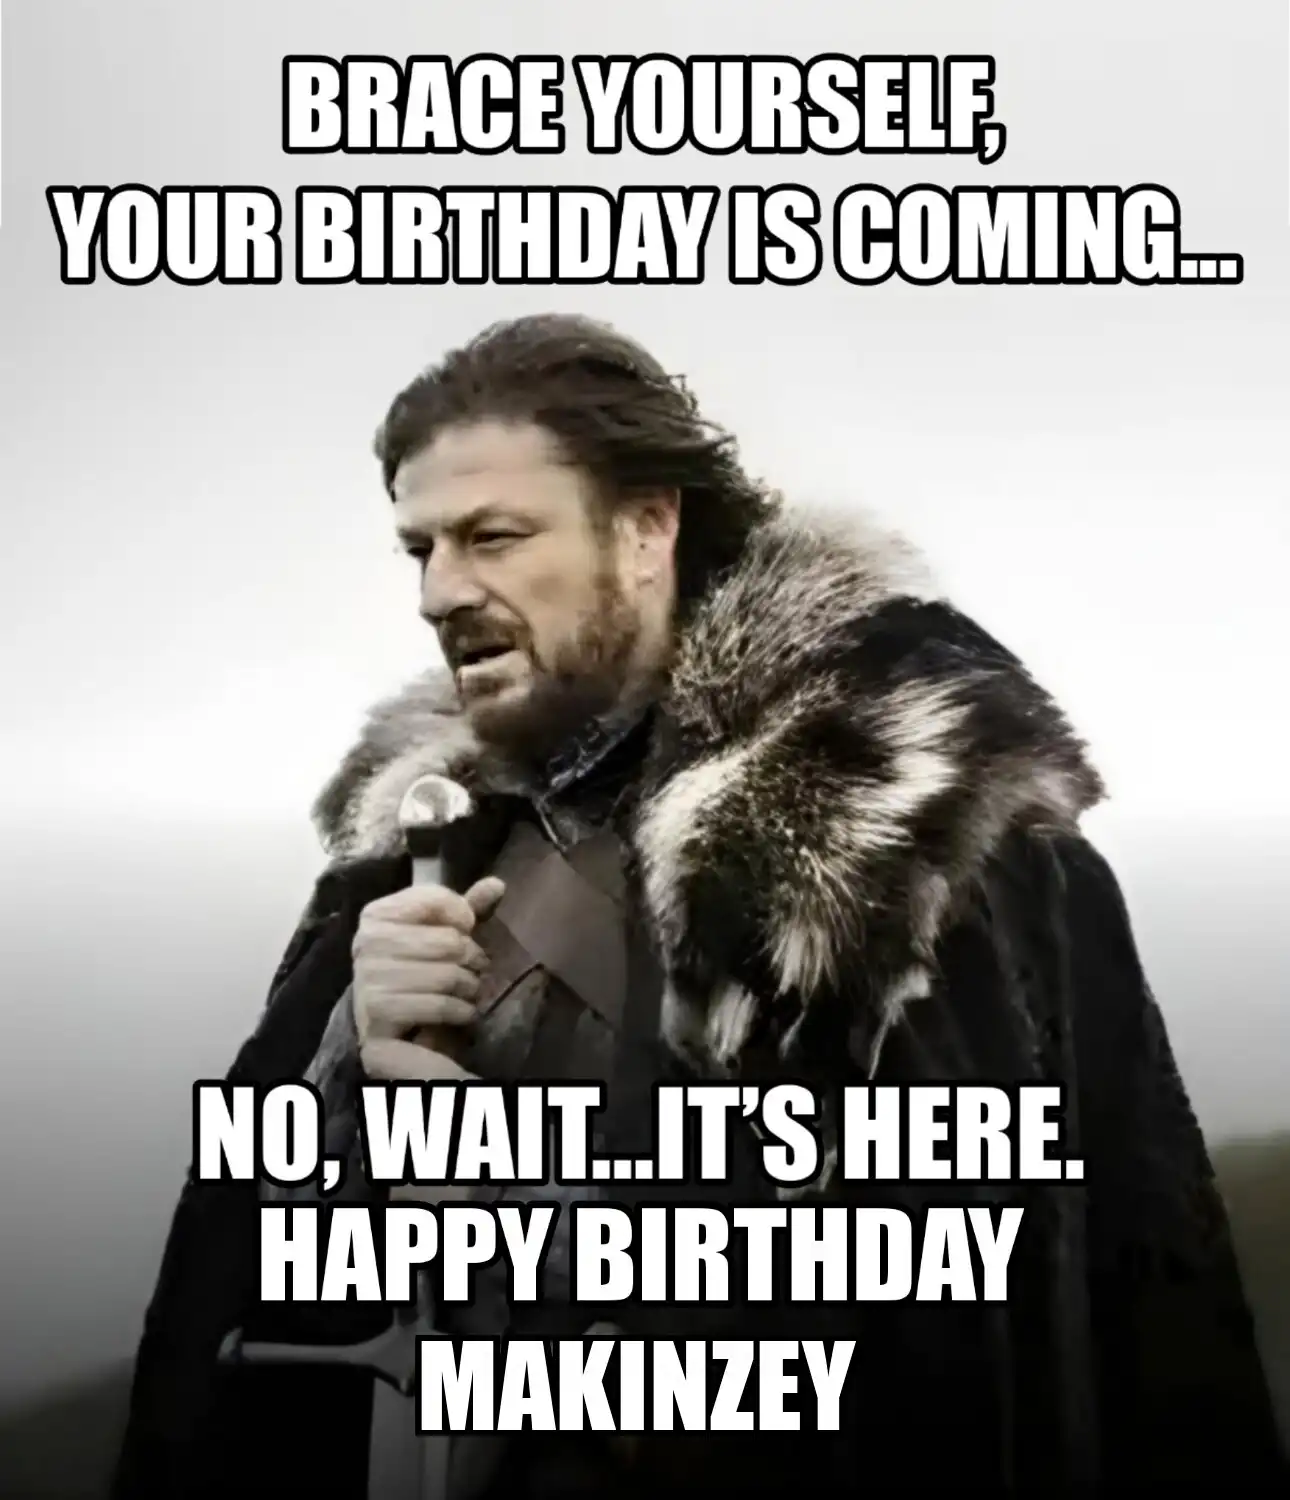 Happy Birthday Makinzey Brace Yourself Your Birthday Is Coming Meme